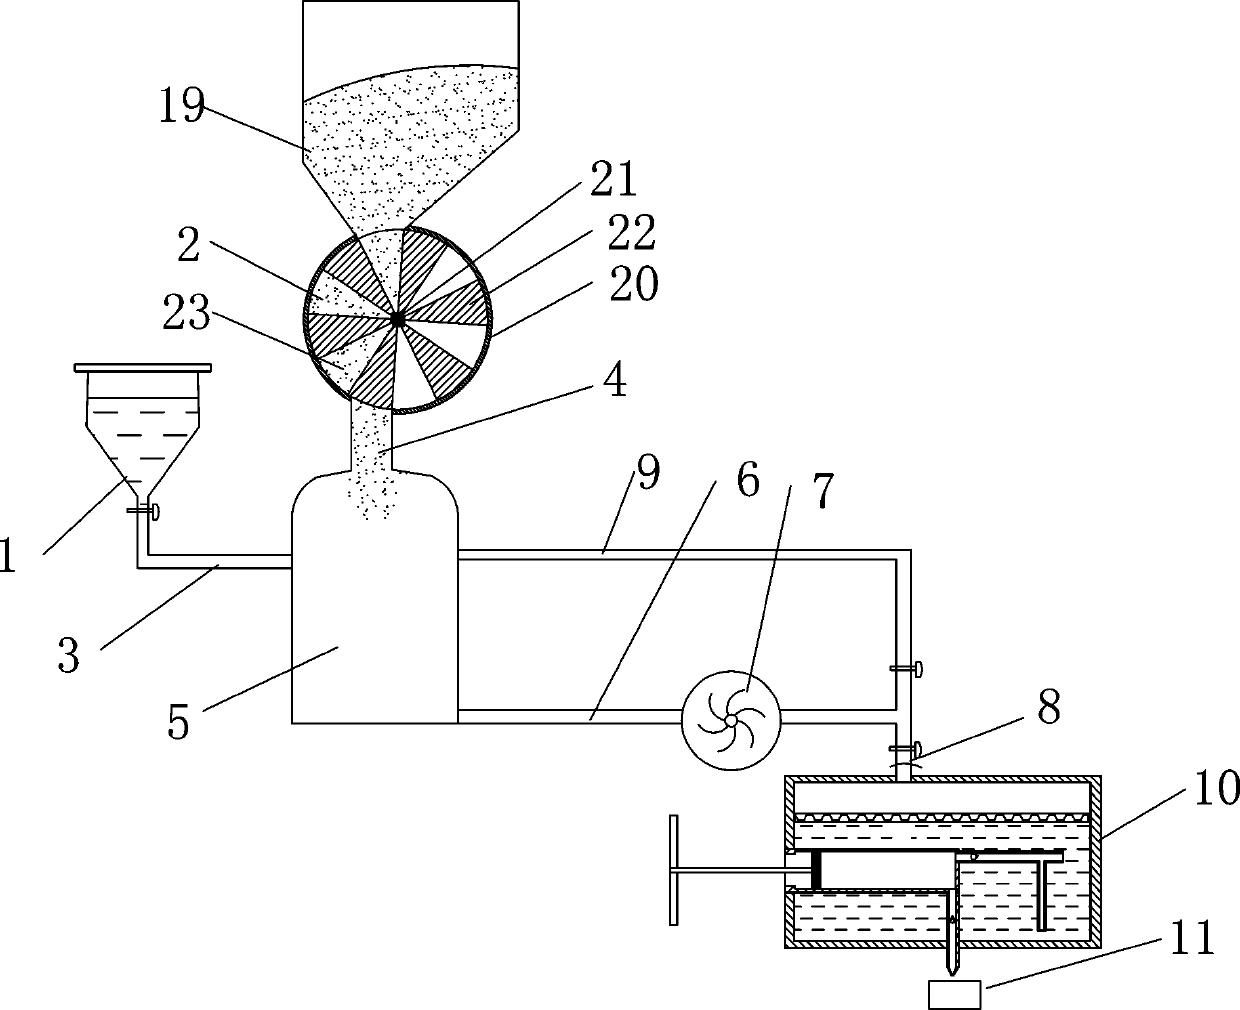 Anti-sticking spraying device for conveyor belt of glass rod softening furnace